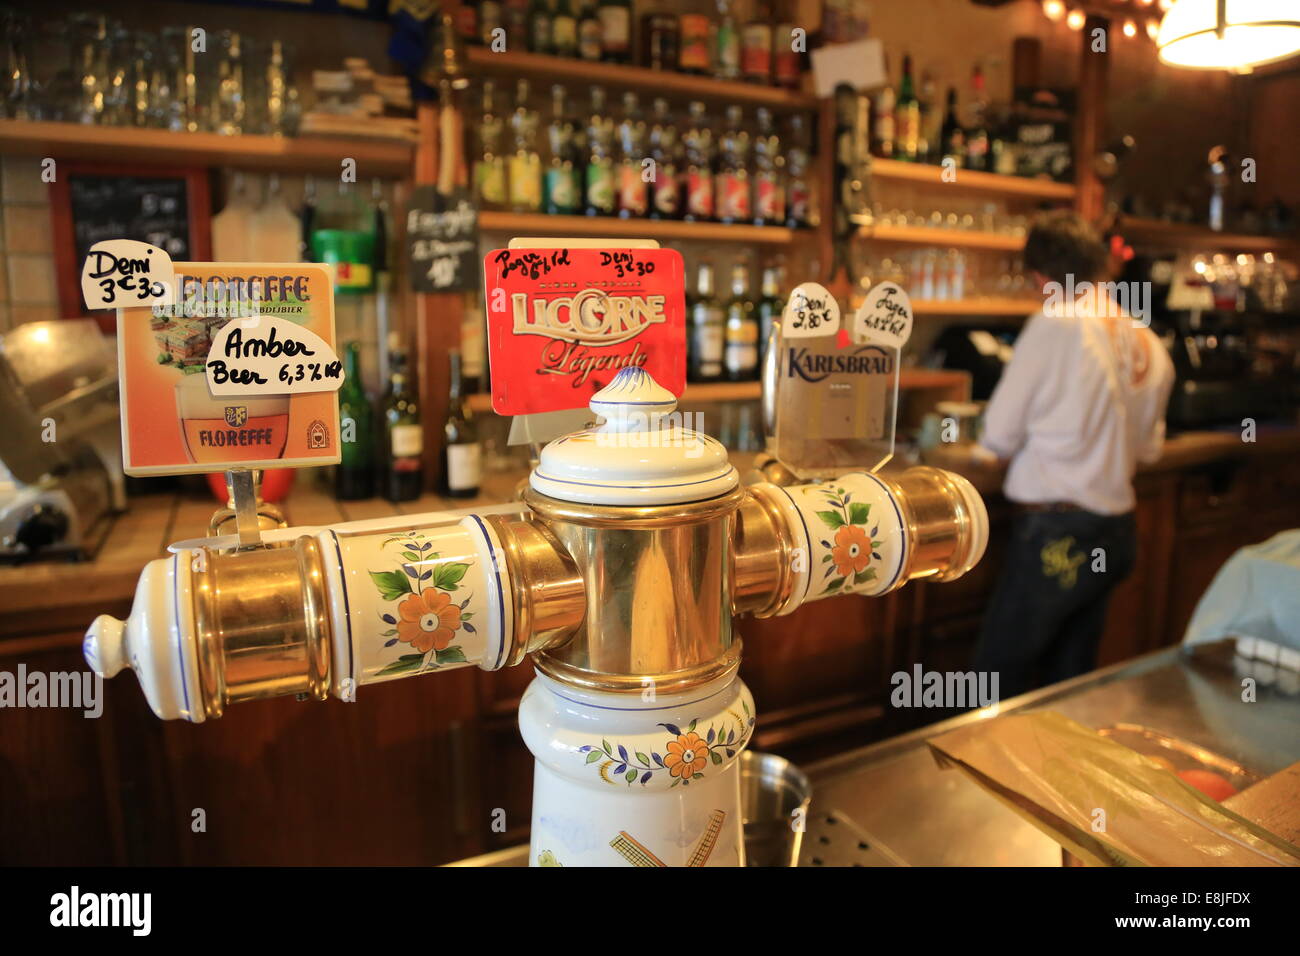 Dispensador de cerveza Dorada, un ejemplo creativo de Aplimet